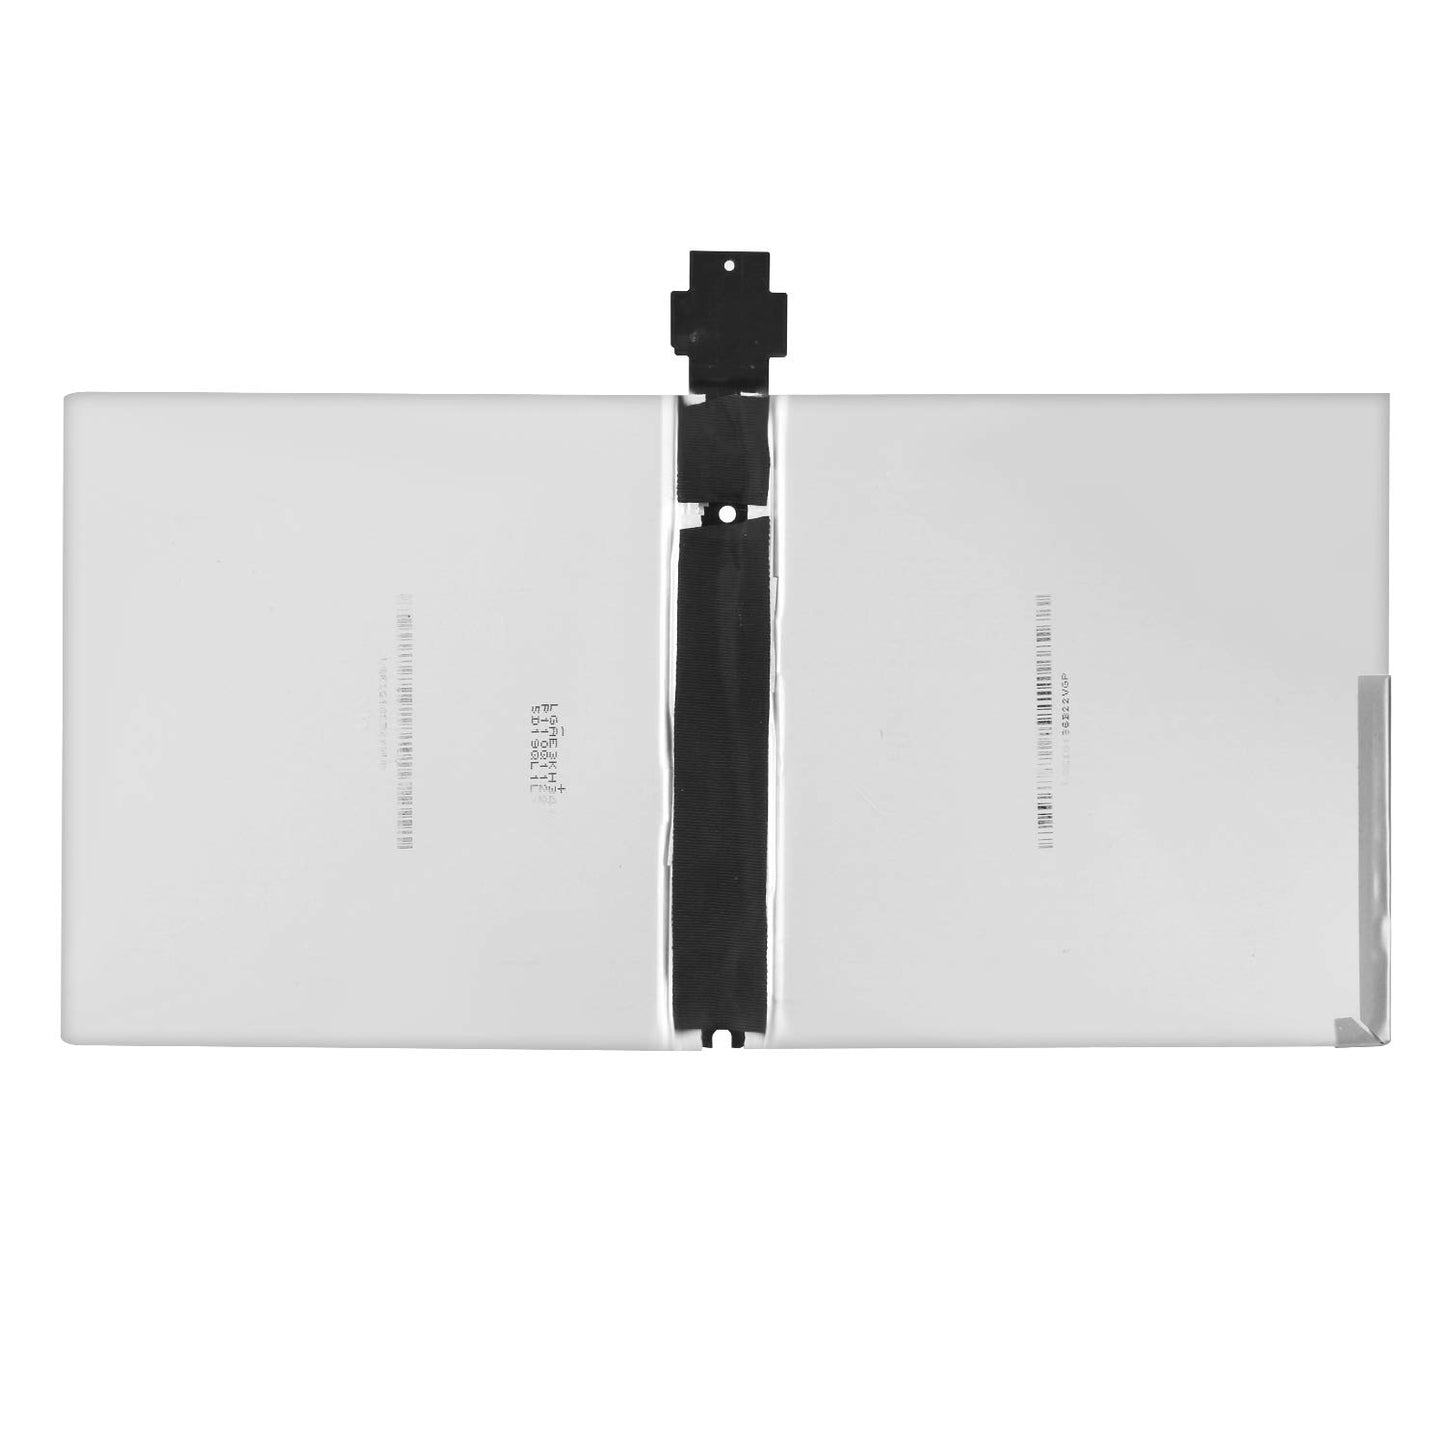 Microsoft DYNR01 New Genuine Battery Pack Surface Pro 4 1724 12.3 G3HTA027H